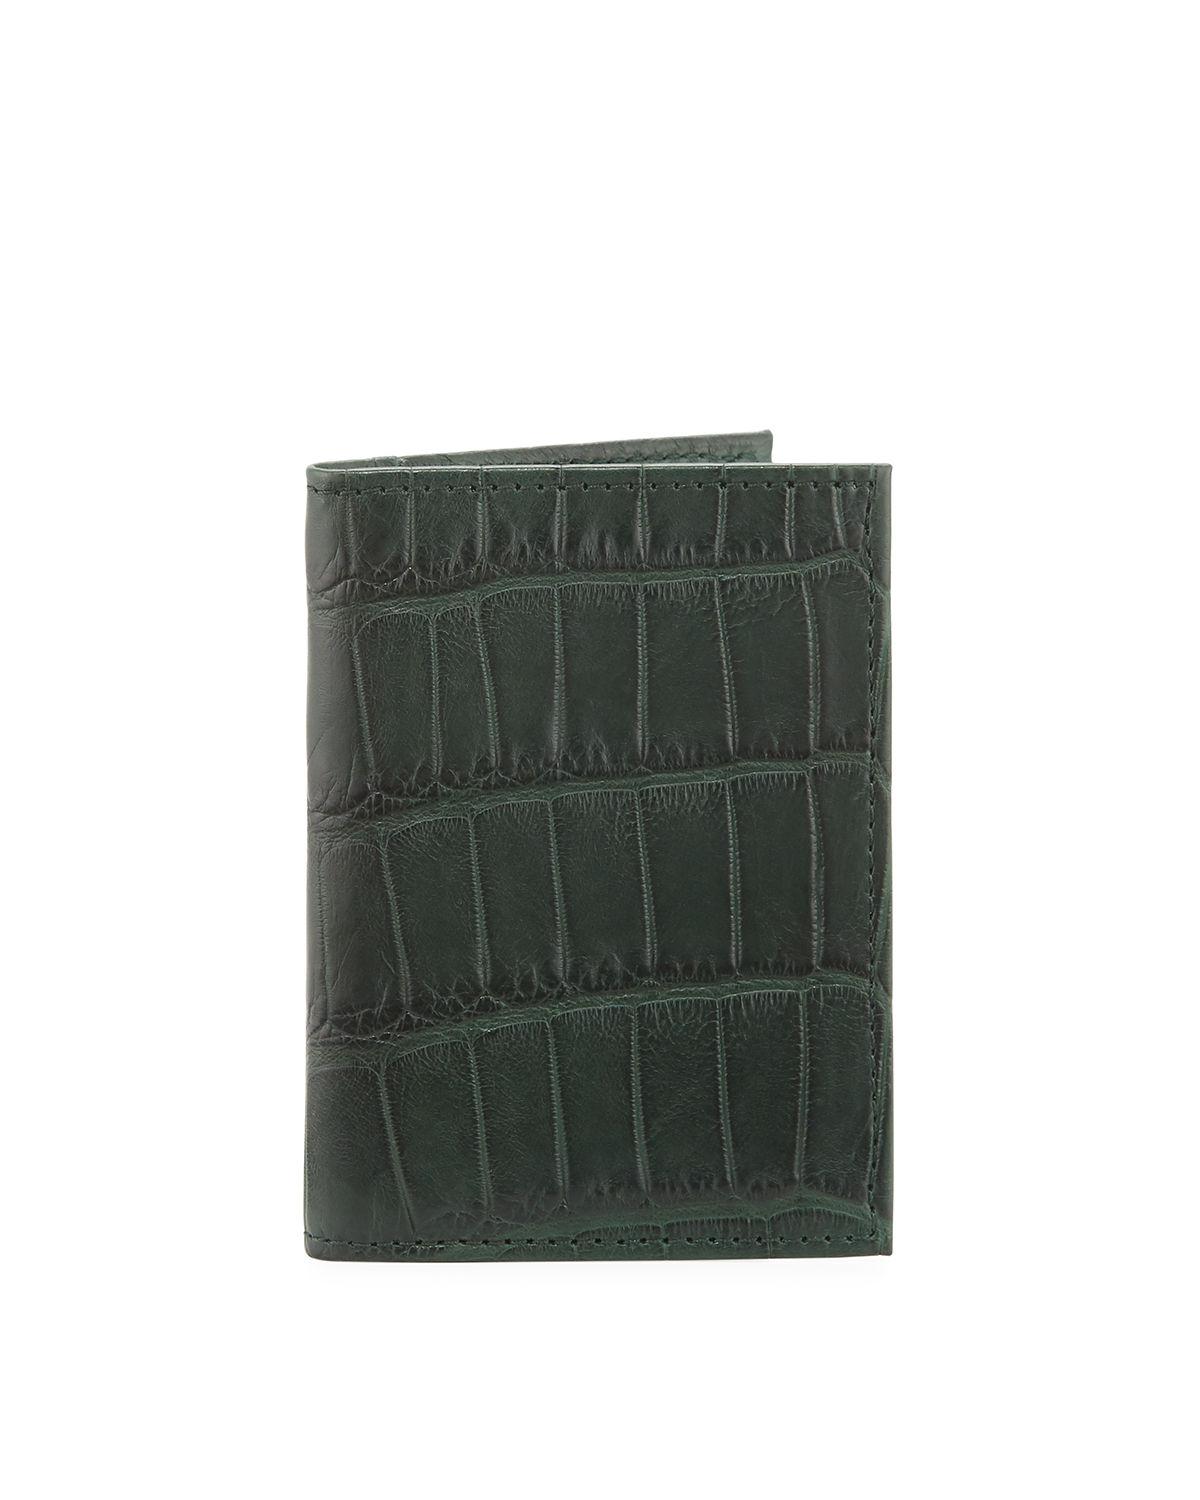 Neiman Marcus Alligator Bi-fold Wallet in Green for Men - Lyst